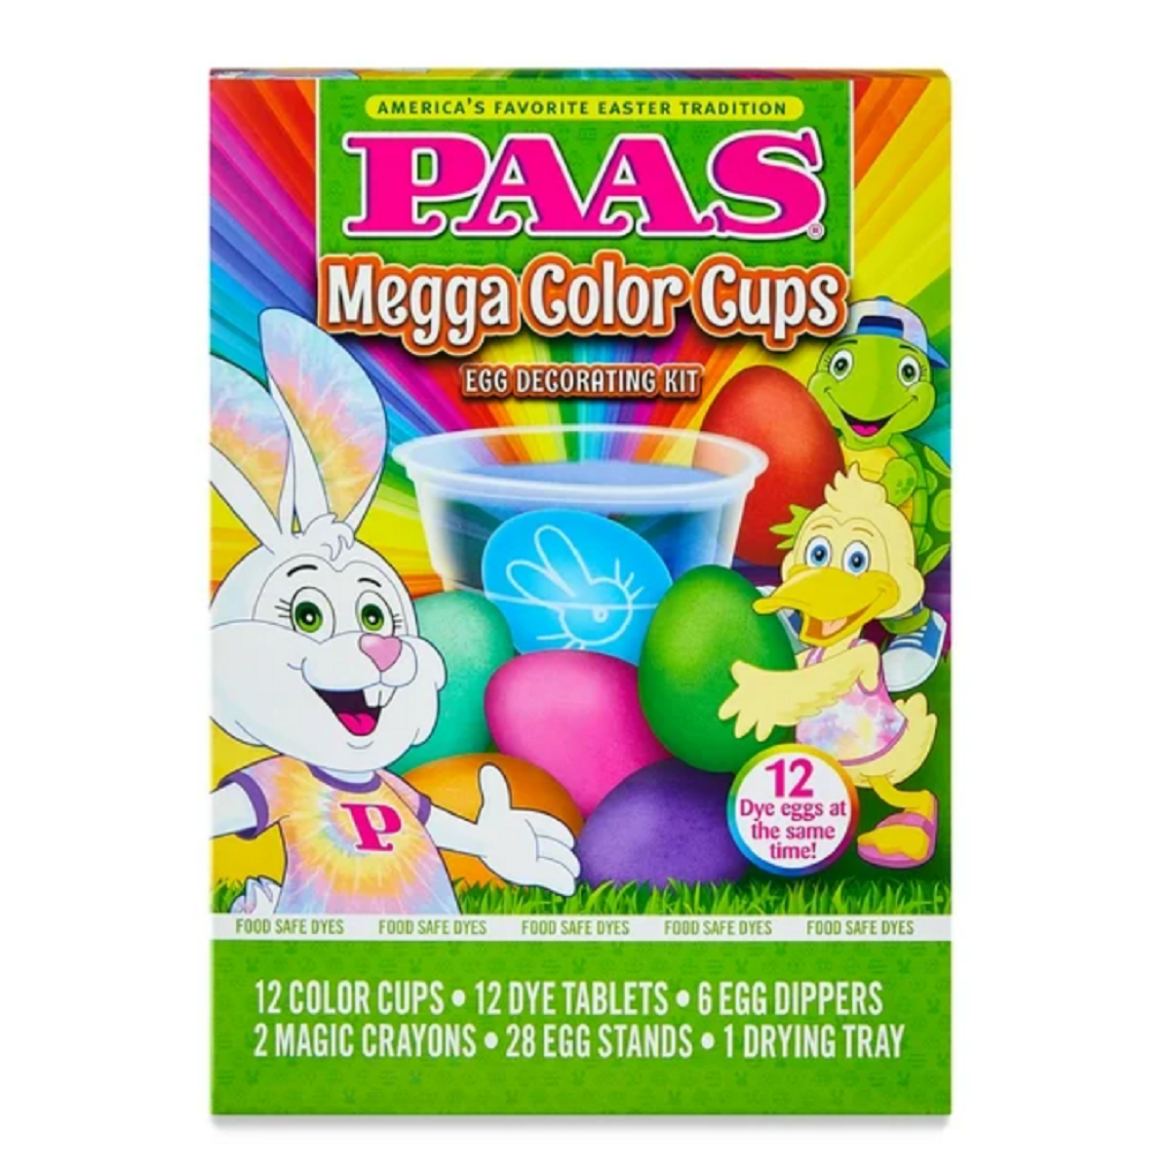 AAS Easter Egg Decorating and Dye Kit, Megga Color Cups, Multicolor, Easter Egg Hunt Near Me